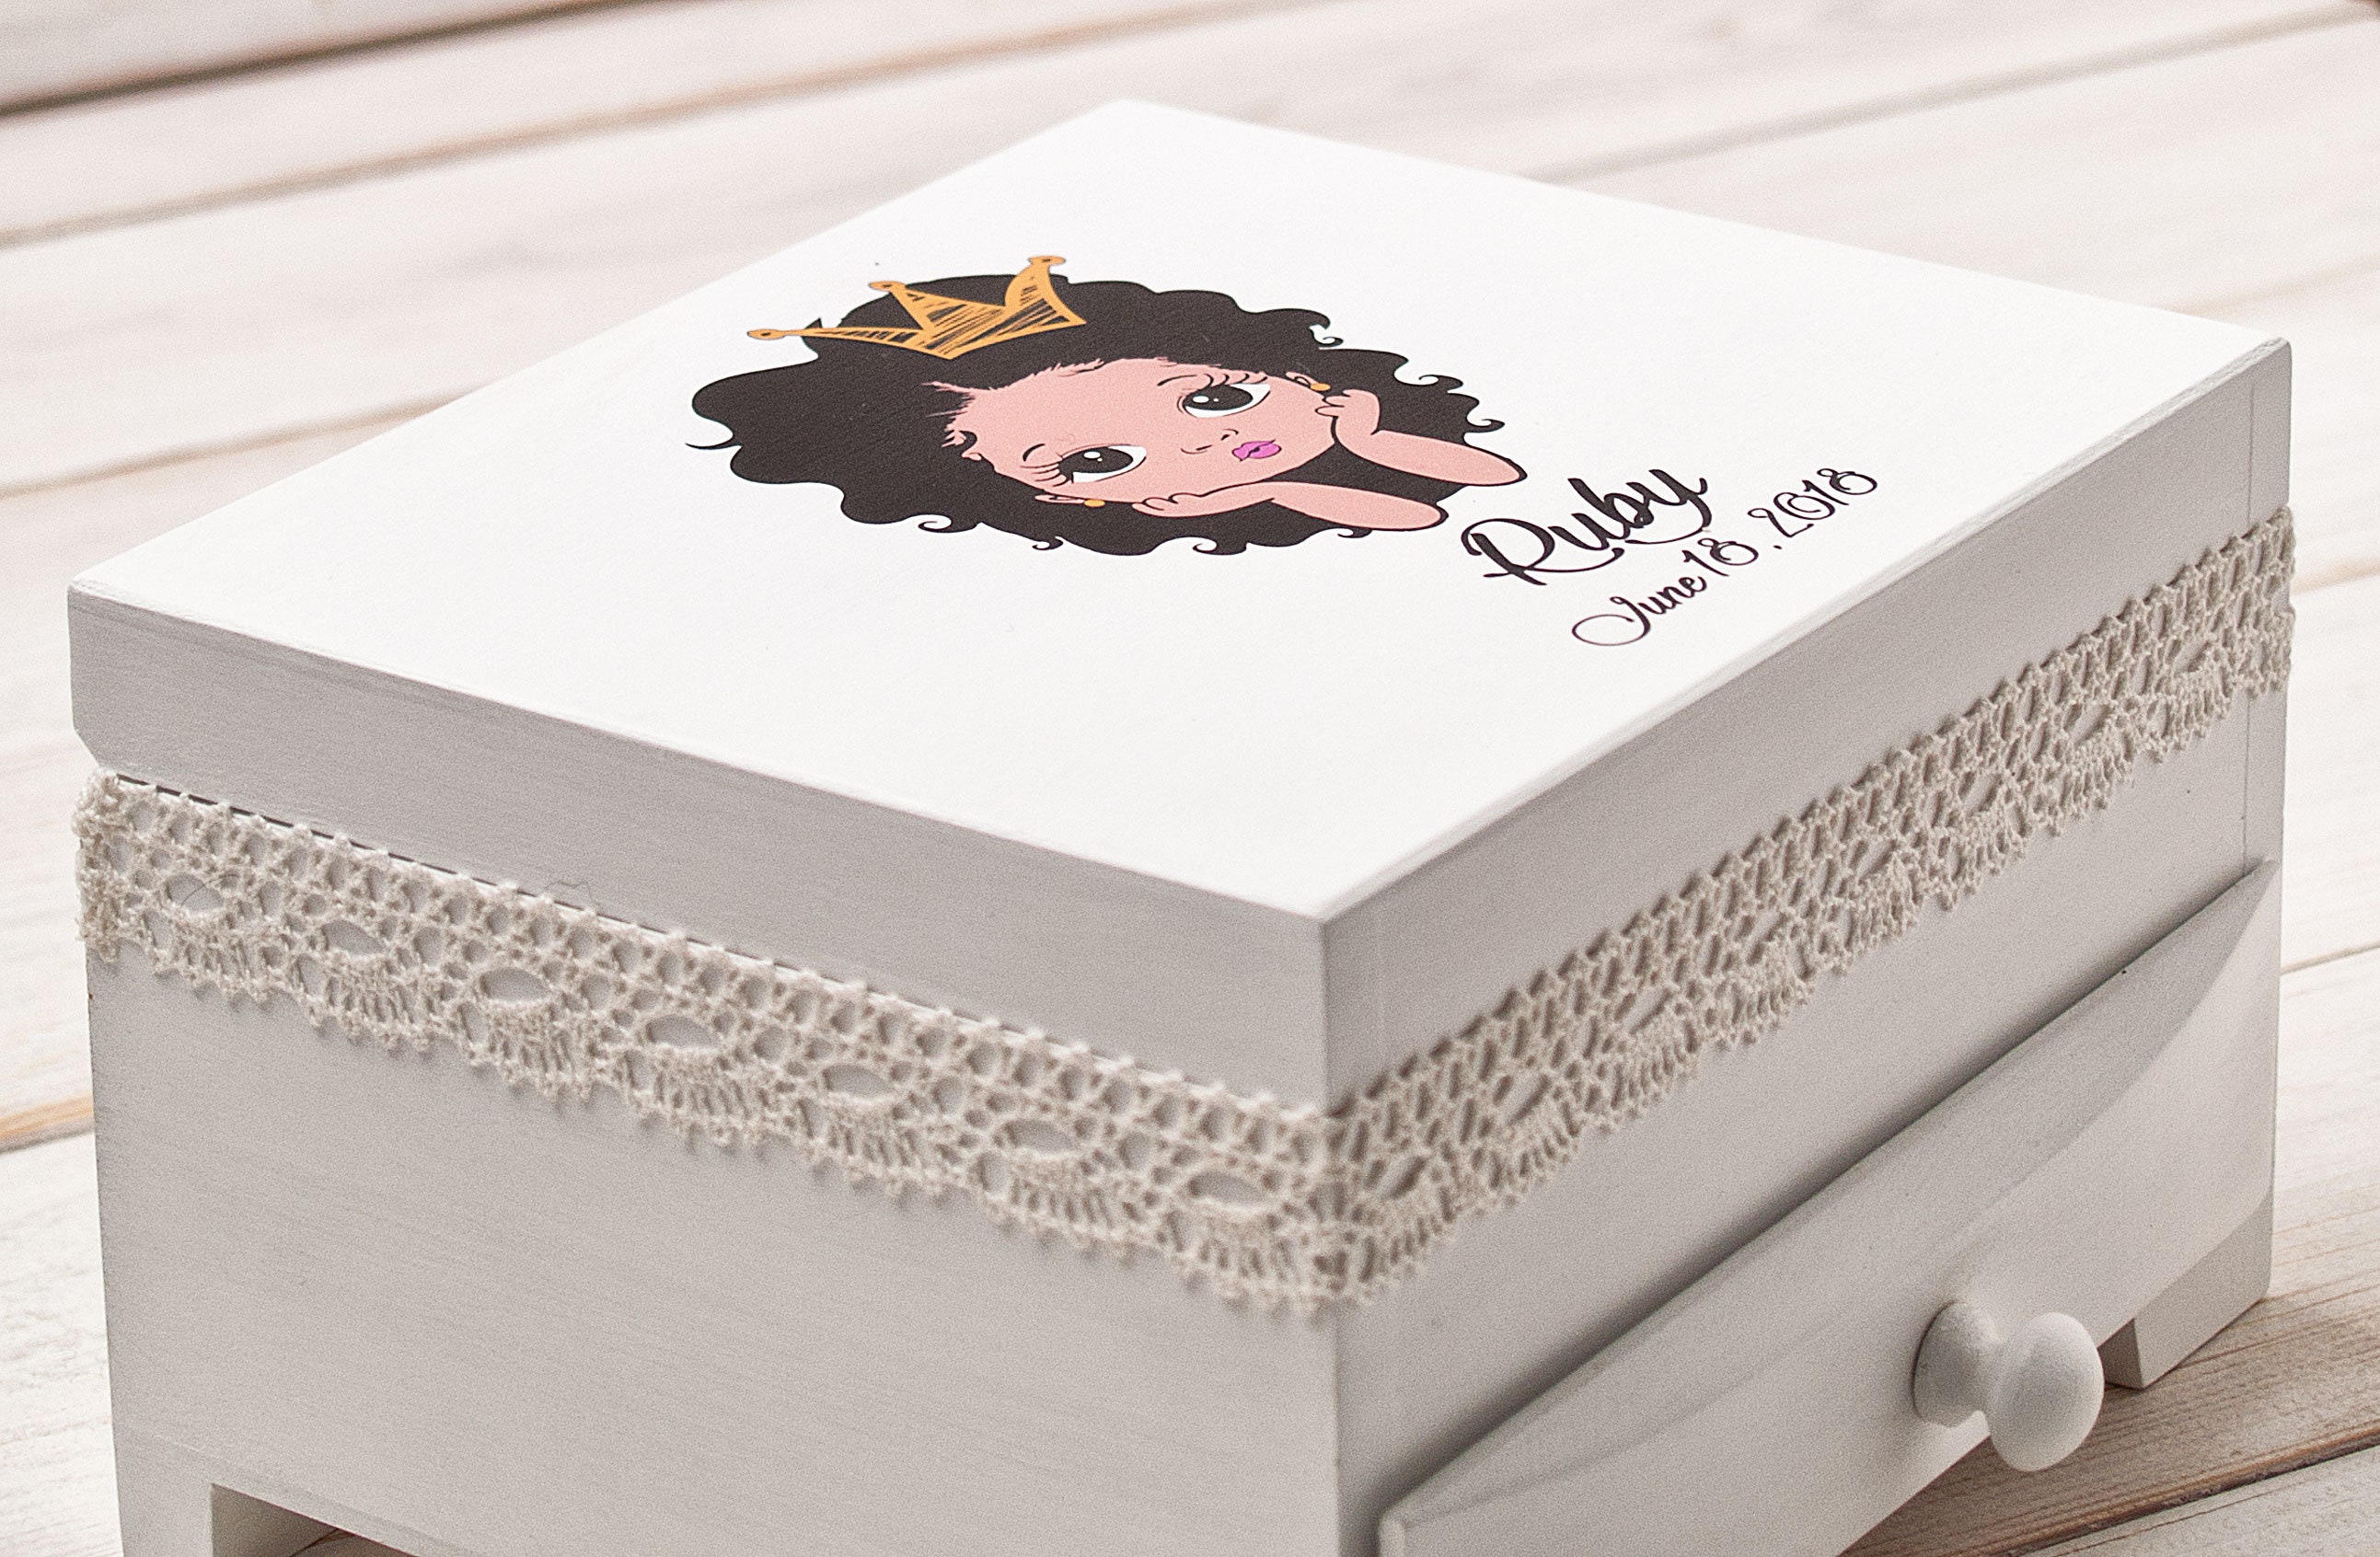 Personalized Large Victorian Keepsake Princess Jewelry Box -  Portugal